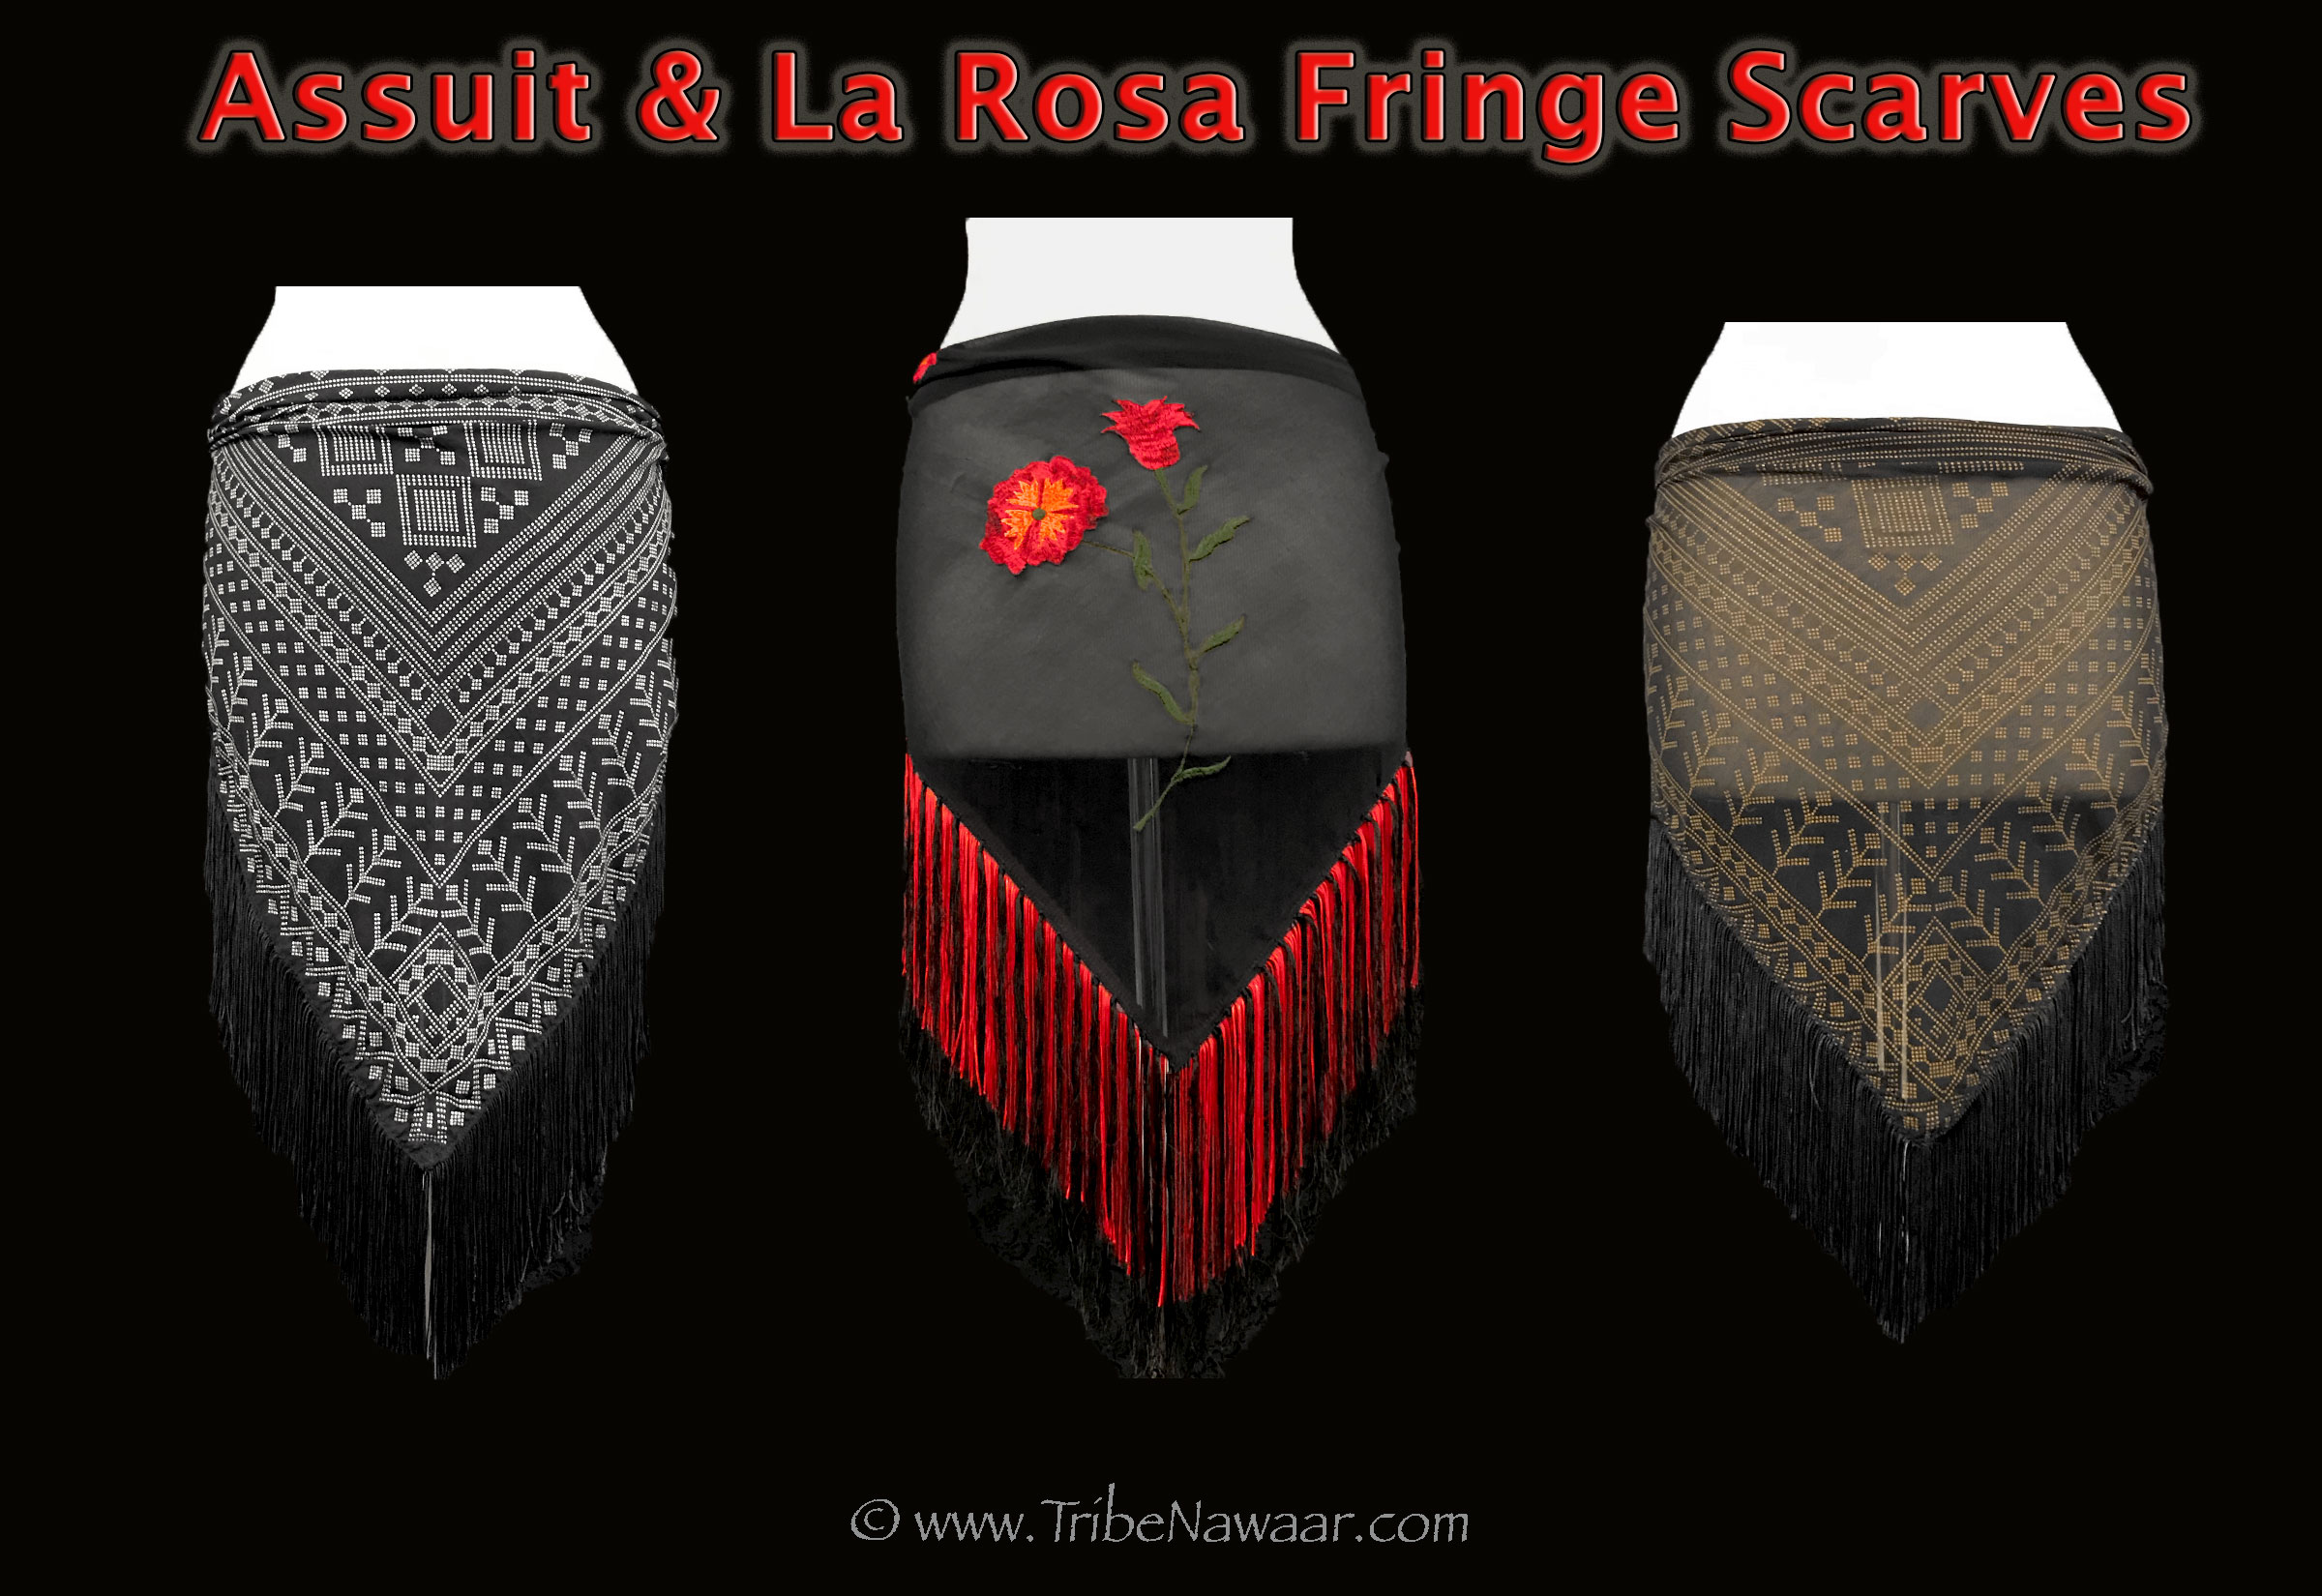 New assuit & la rosa fringed scarves